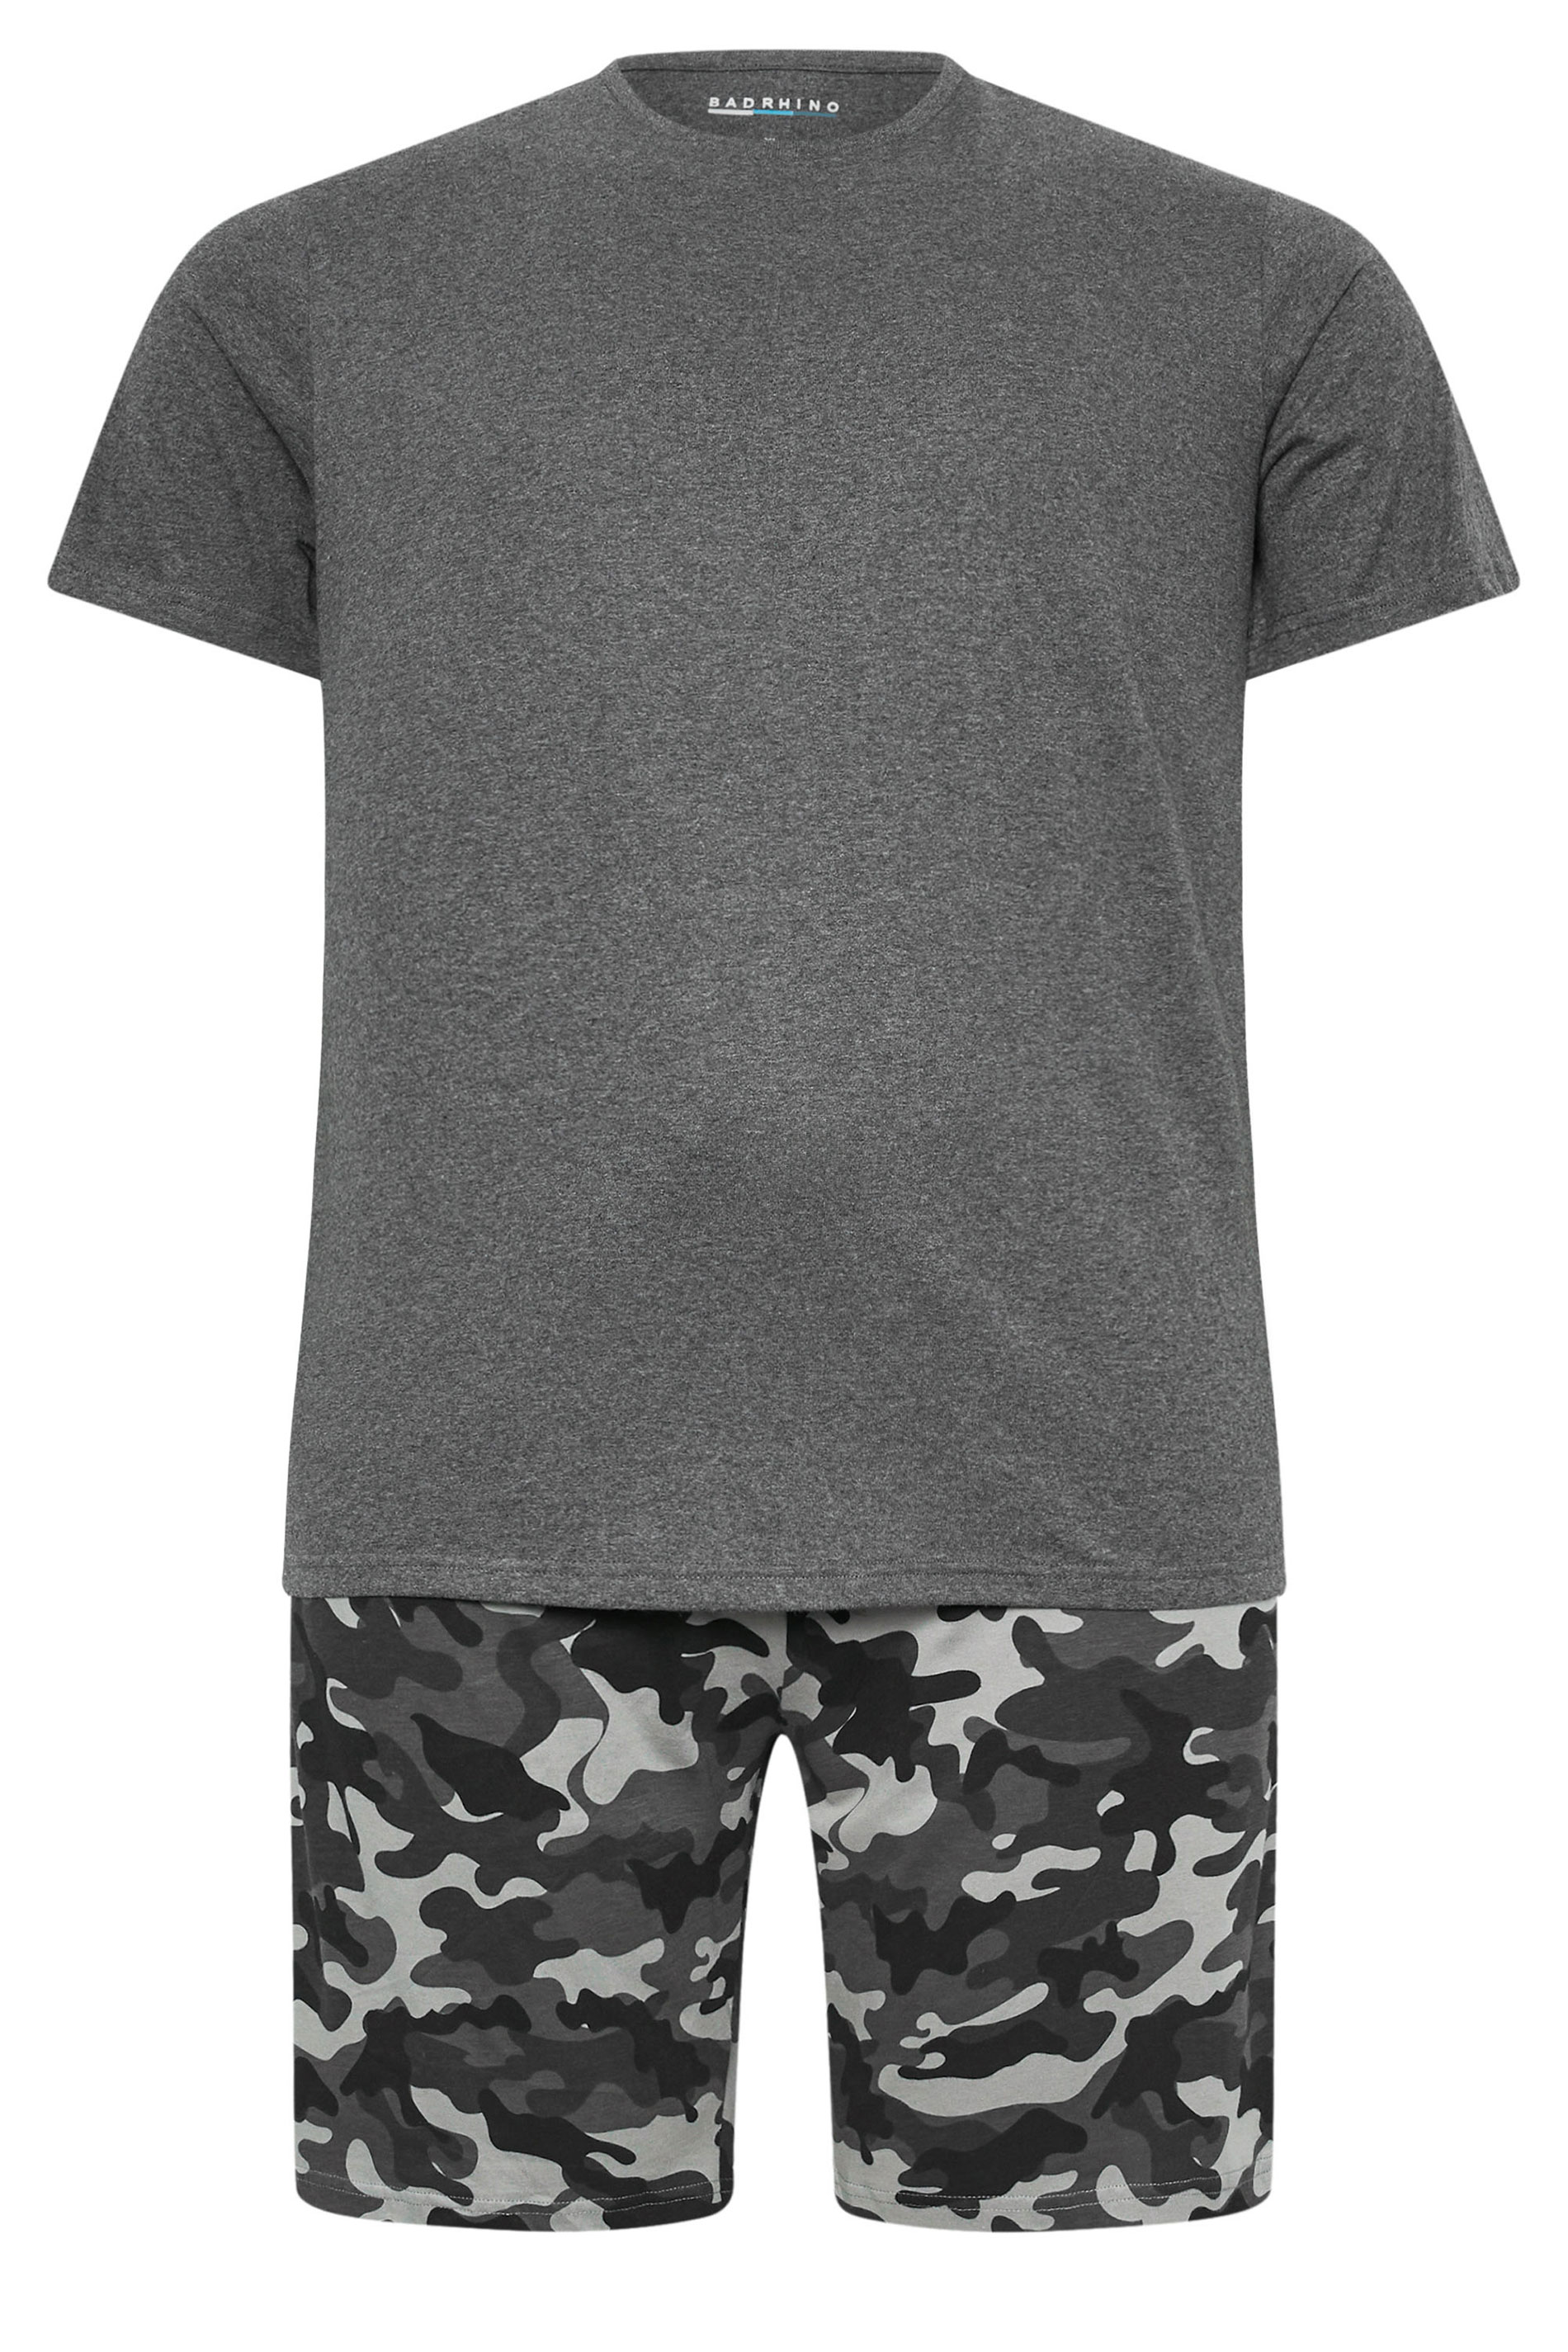 BadRhino Big & Tall Grey Camo Print Shorts and T-Shirt Pyjama Set | BadRhino 3